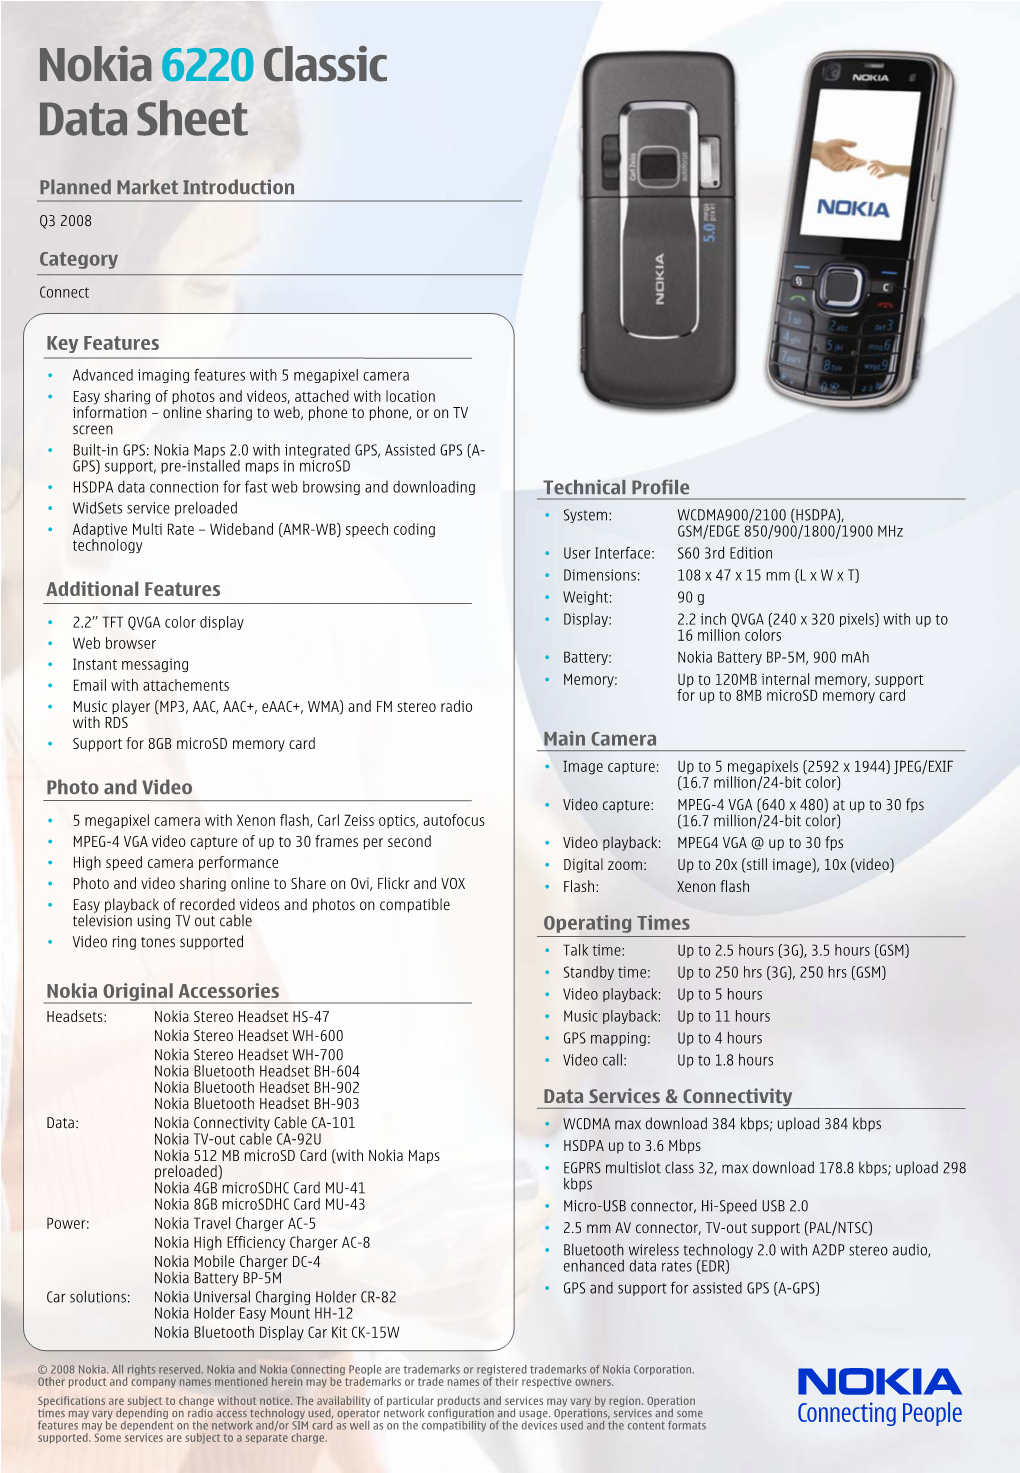 Nokia 6220 Classic Data Sheet